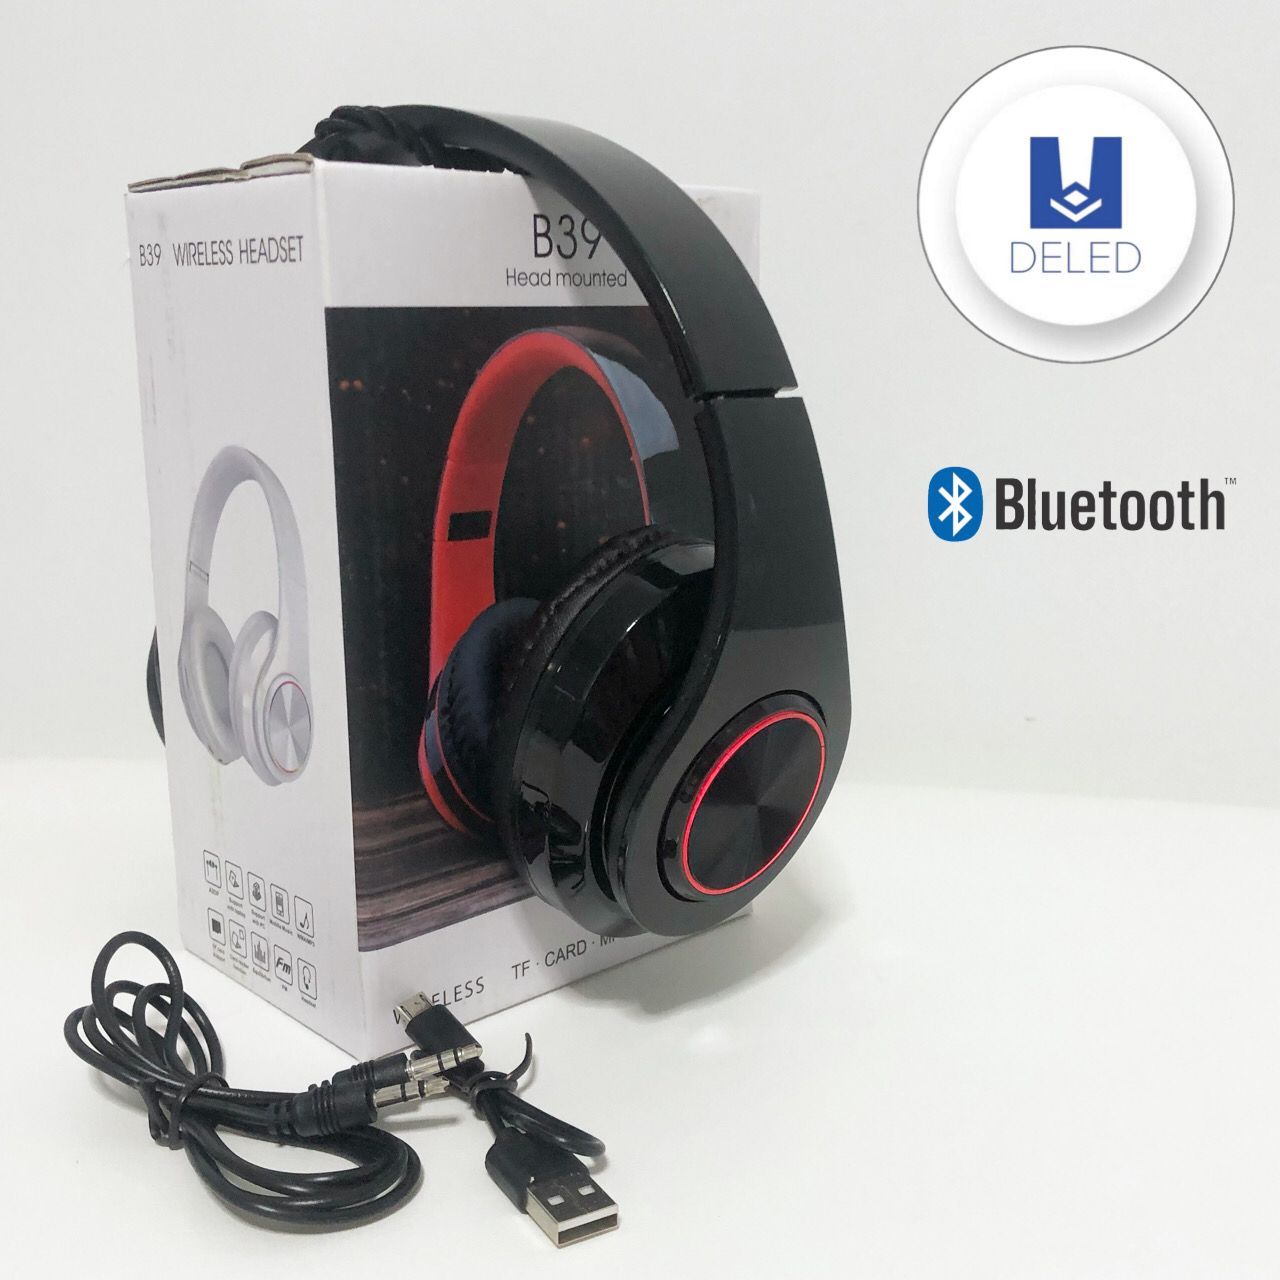 Audífonos Diadema Bluetooth Inalámbricos Recargables Plegables B39 GD-04994